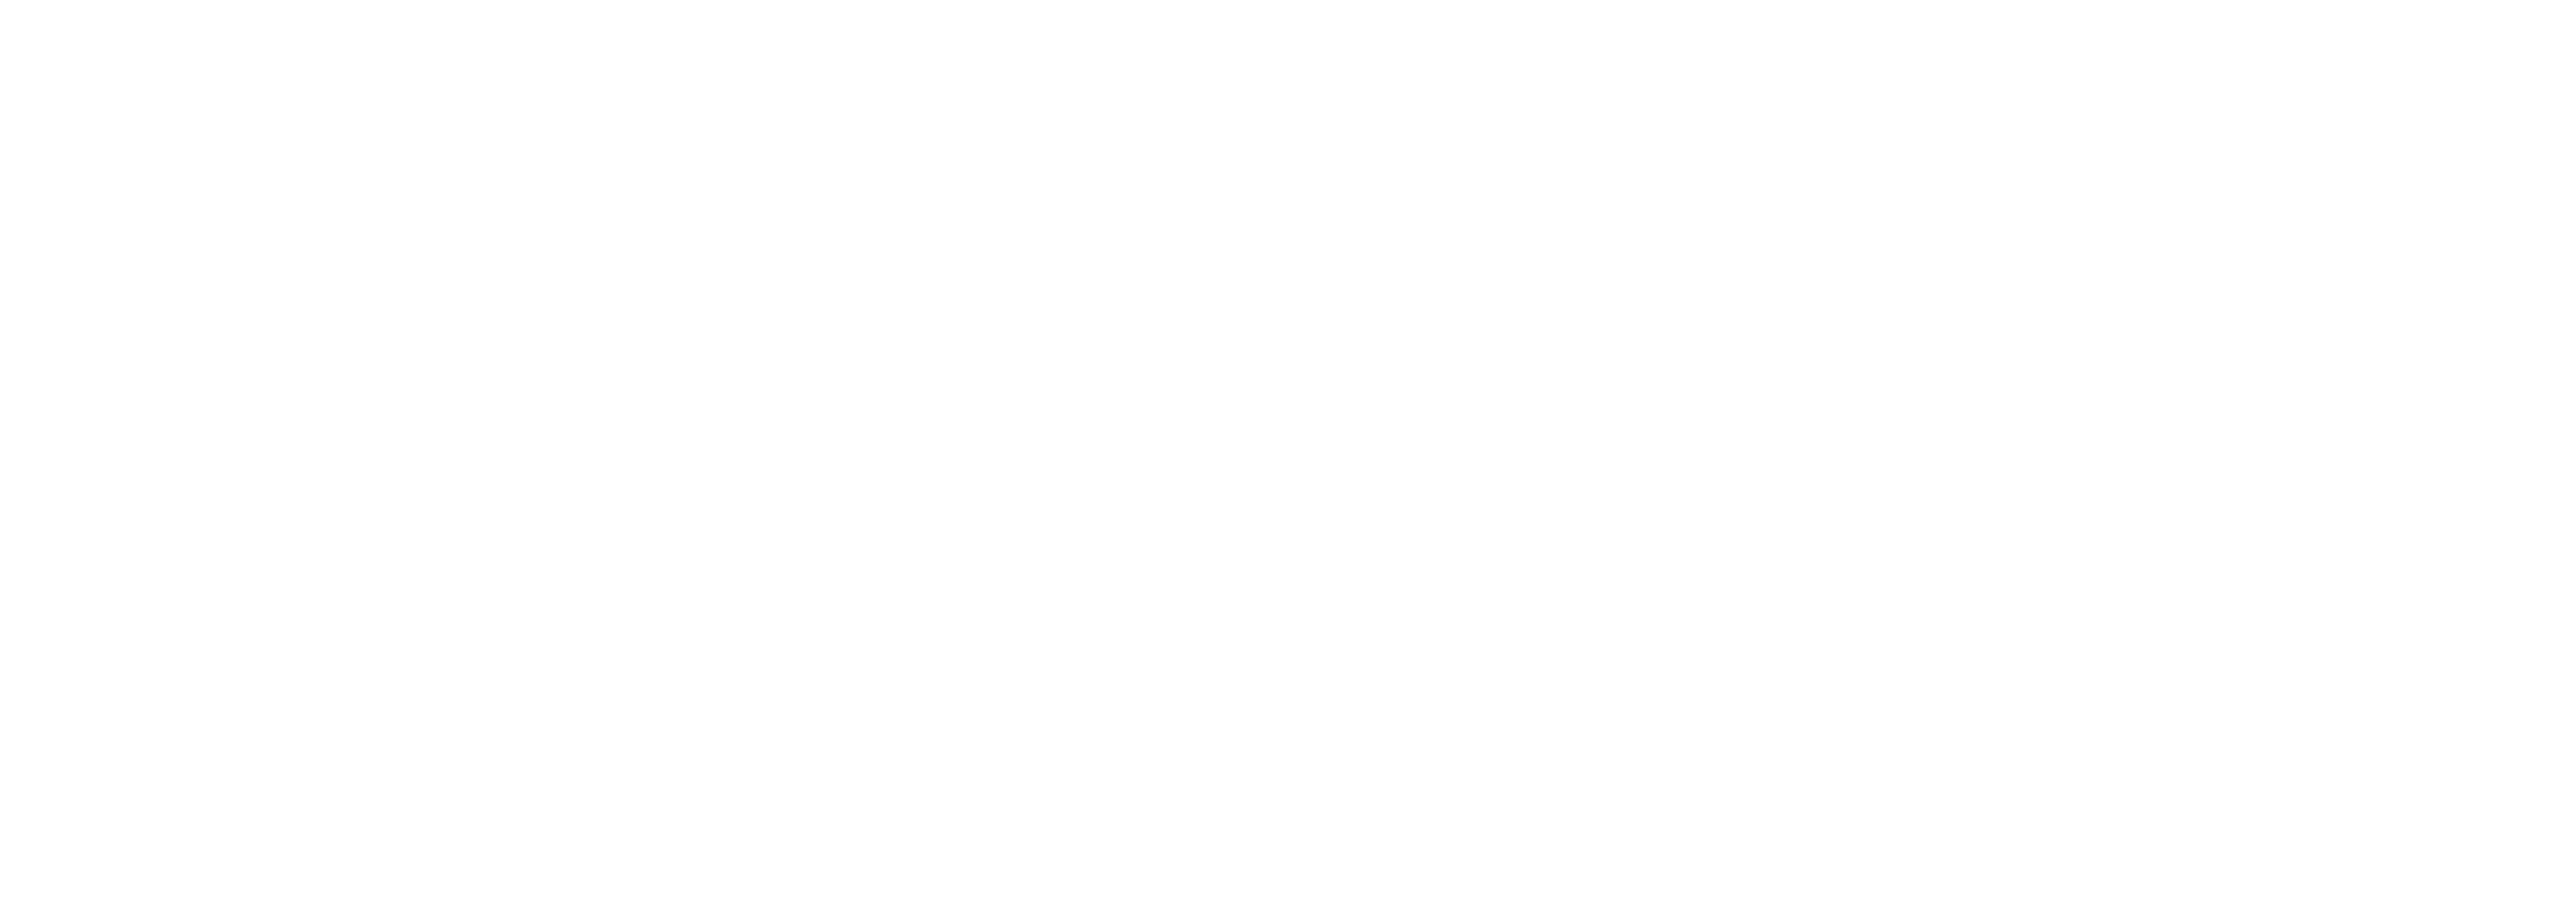 Latest Sensual Delights Updates (2021) - Escort Service India